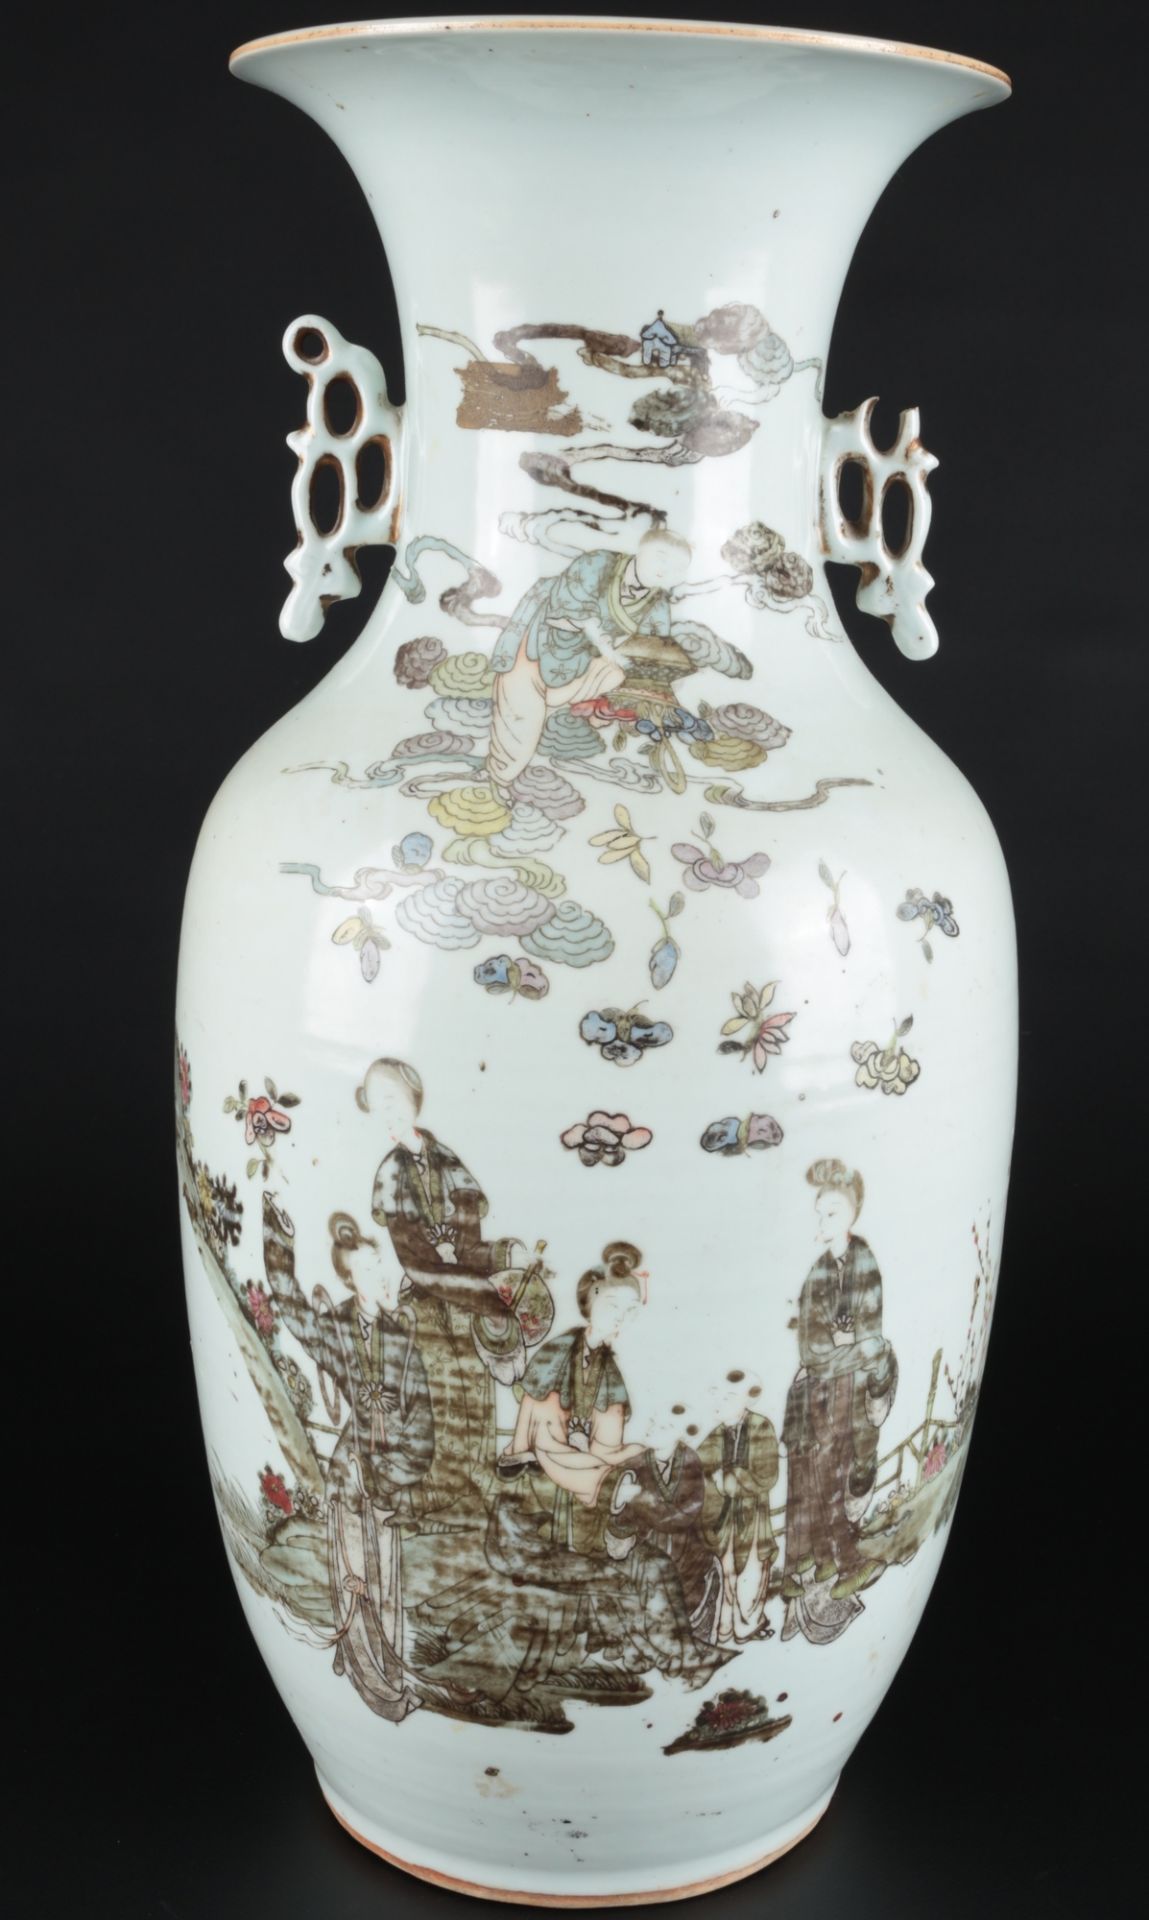 China große Vase Kuang-hsü 1875-1908, chinese large vase,